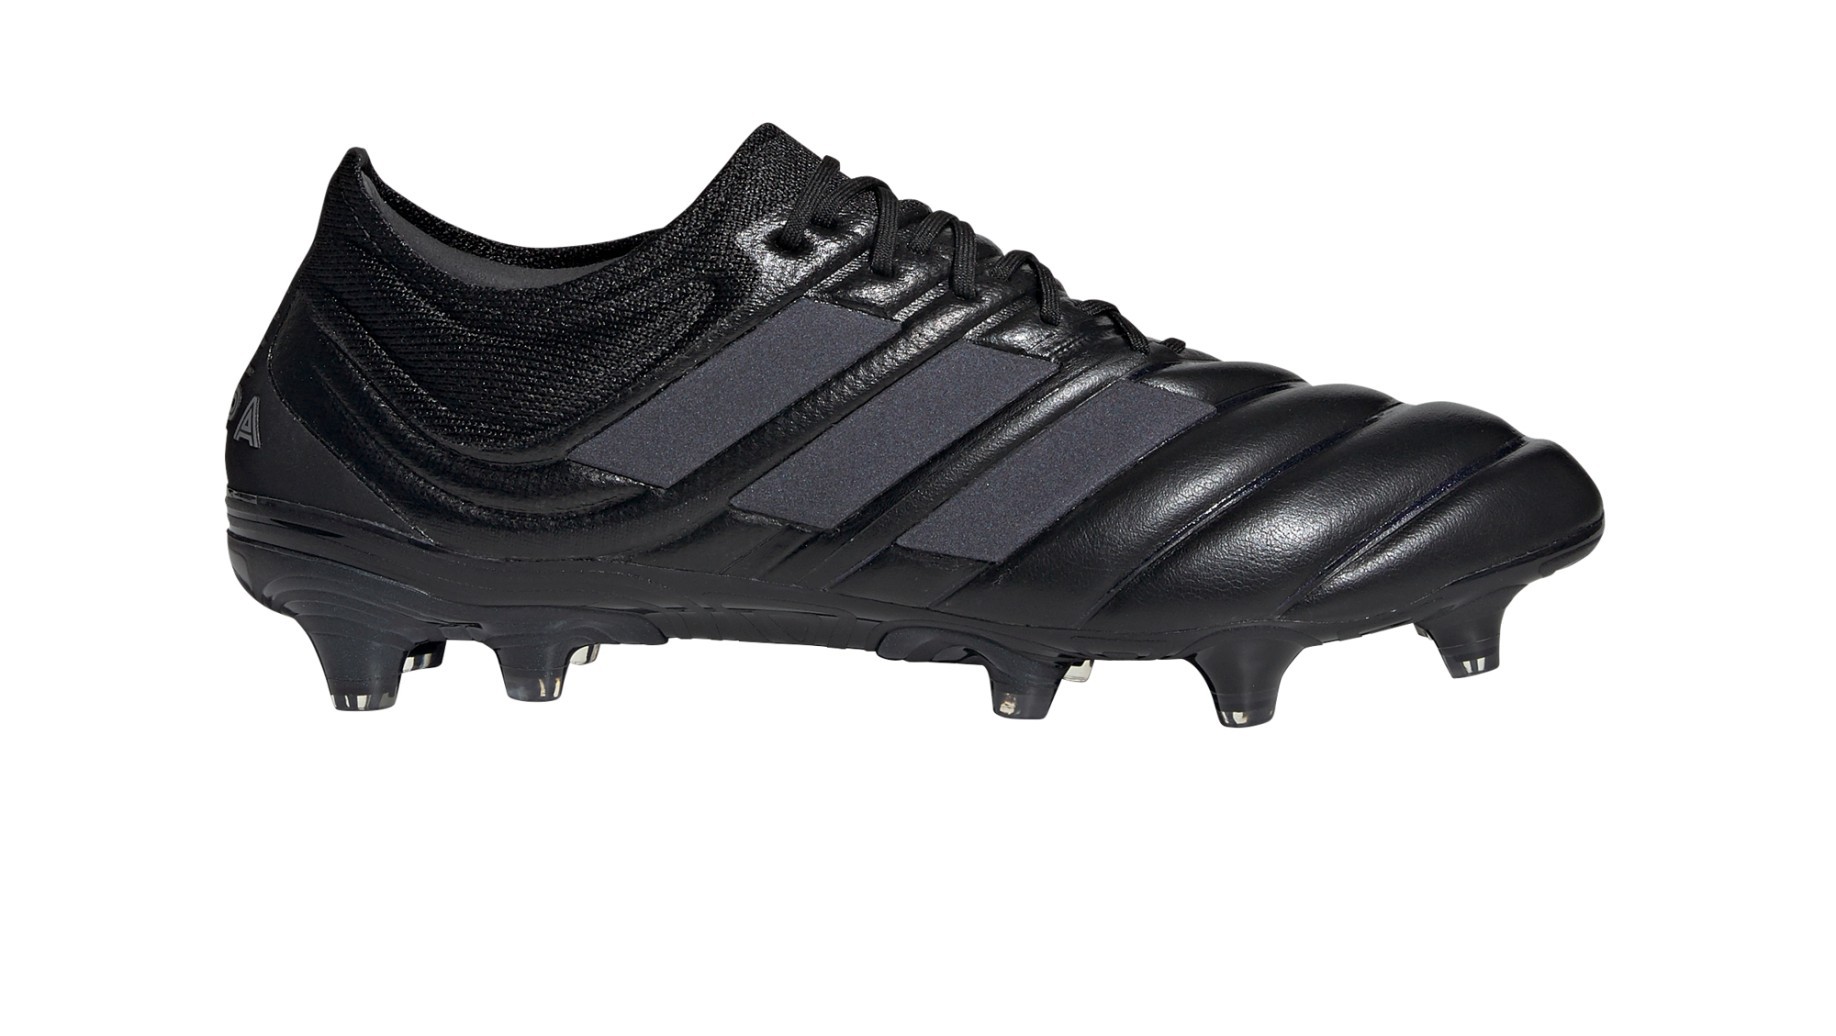 Botas de Adidas Copa 19.1 FG Dark Script Pack colore negro - Adidas - SportIT.com